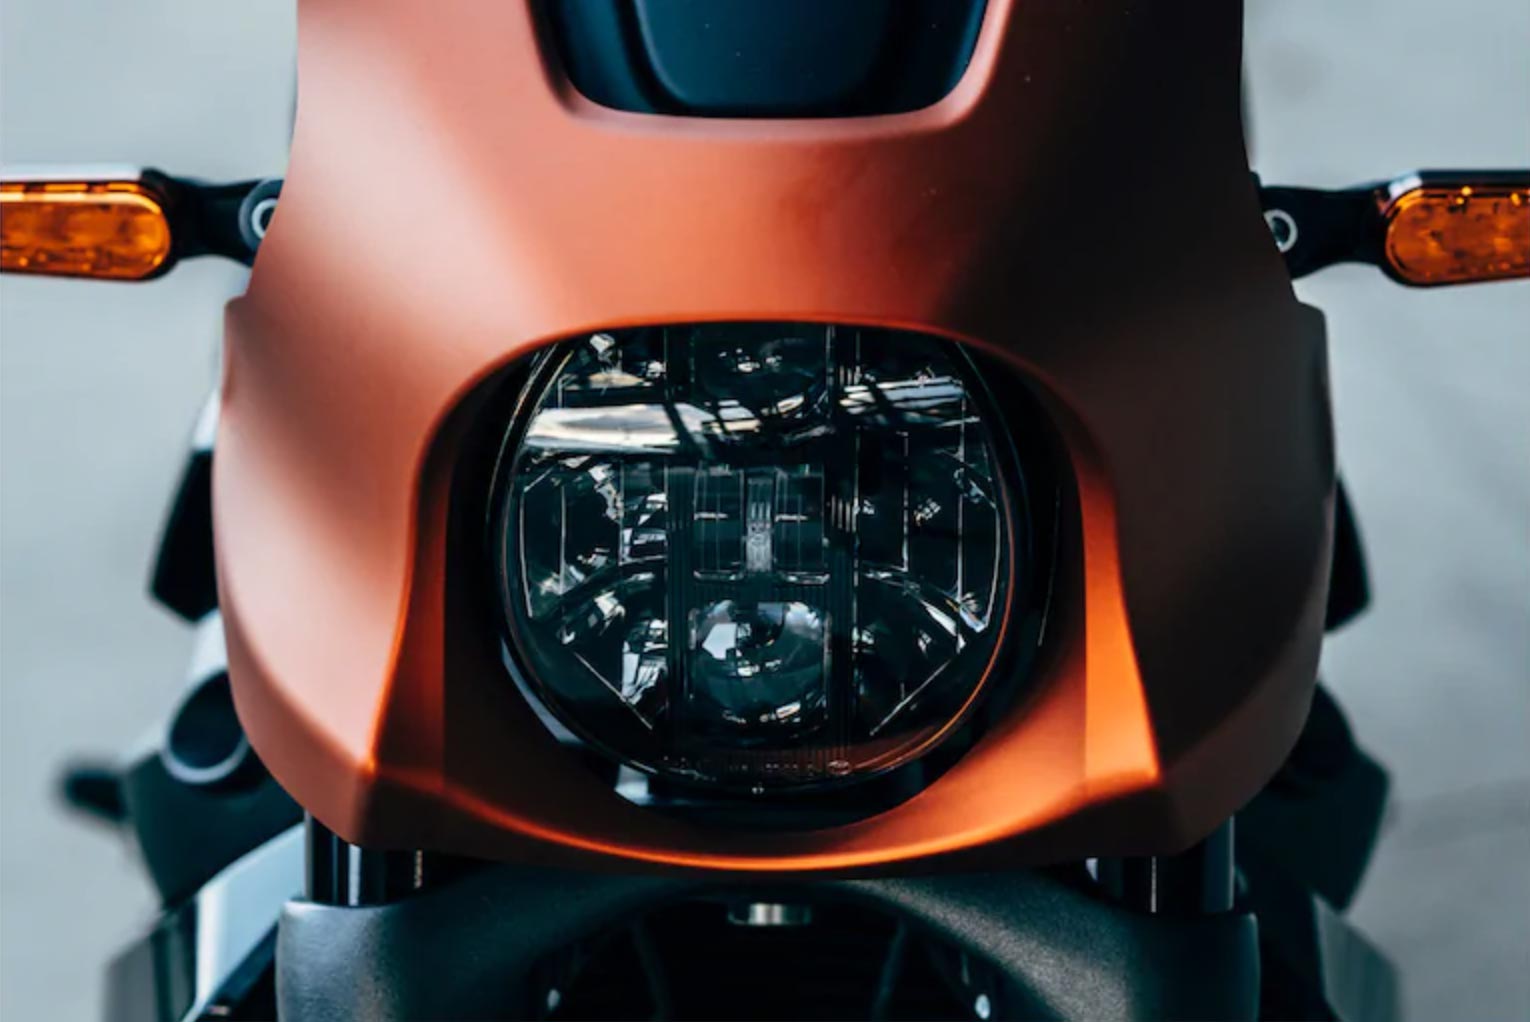 Harley Davidson LiveWire 2019 Review